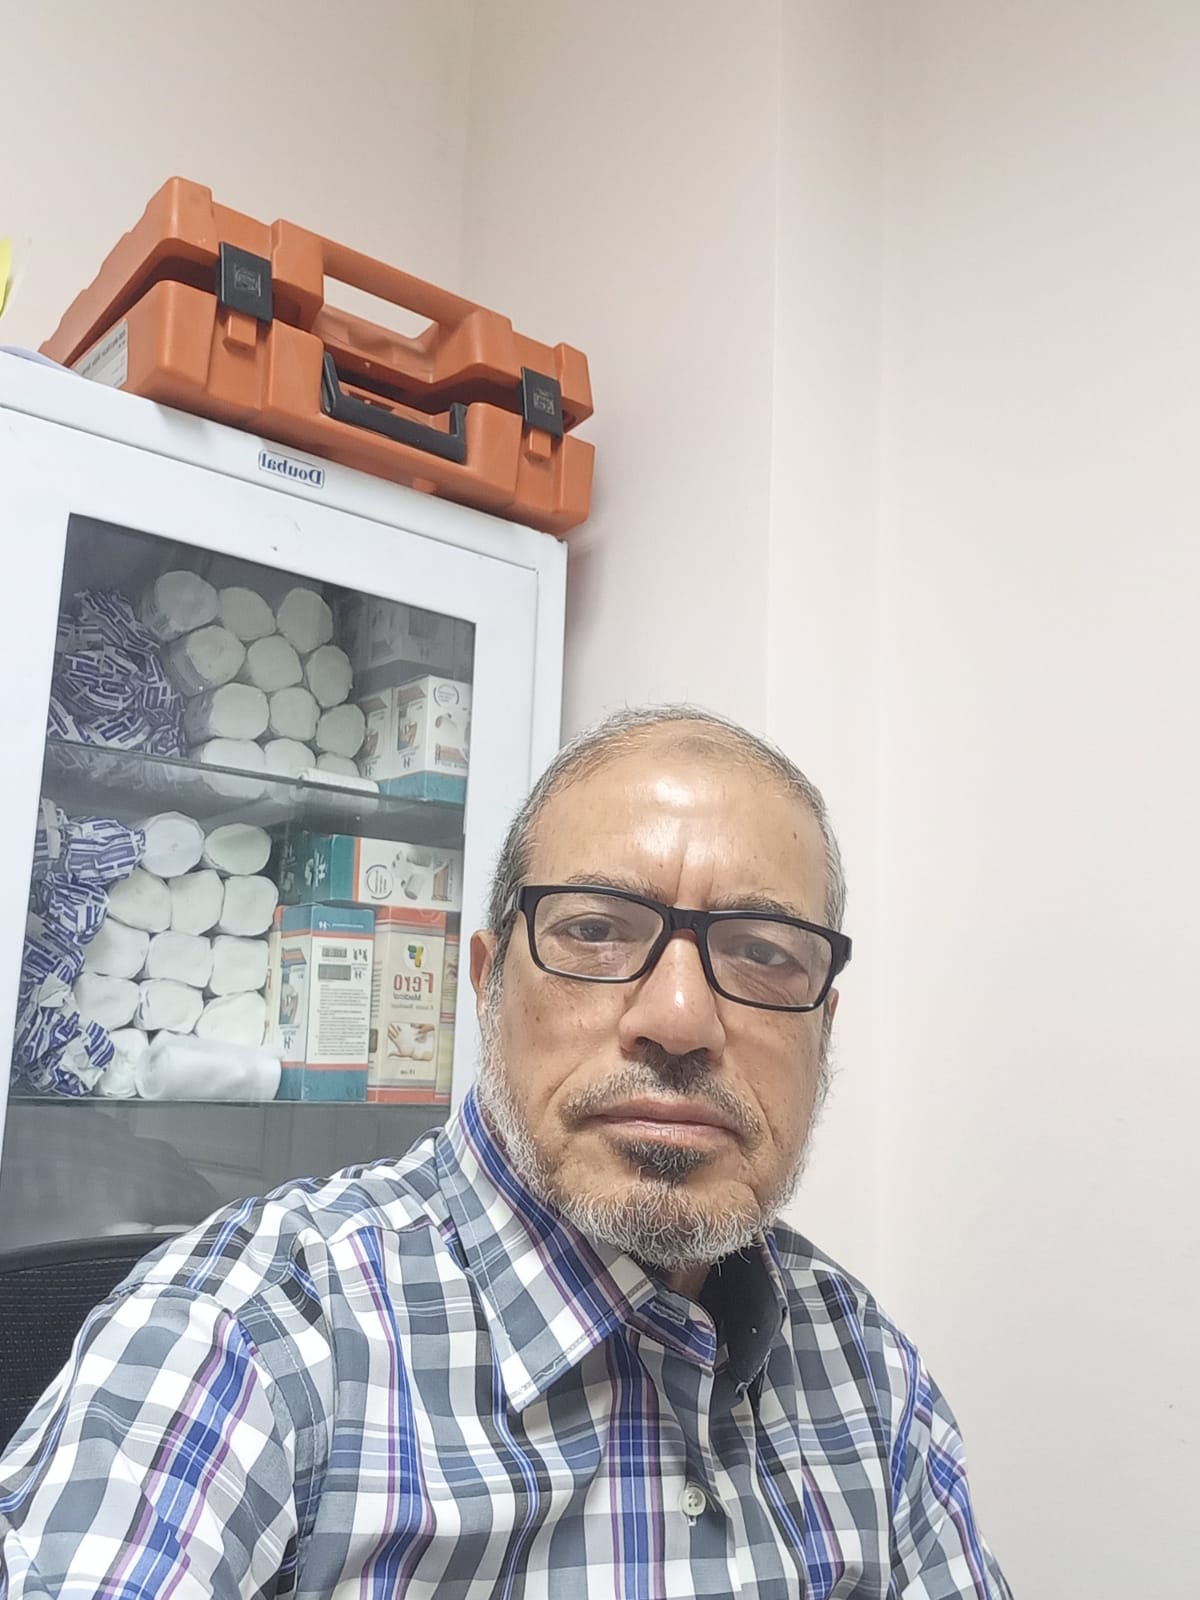 Dr. Abdel Fattah Farag